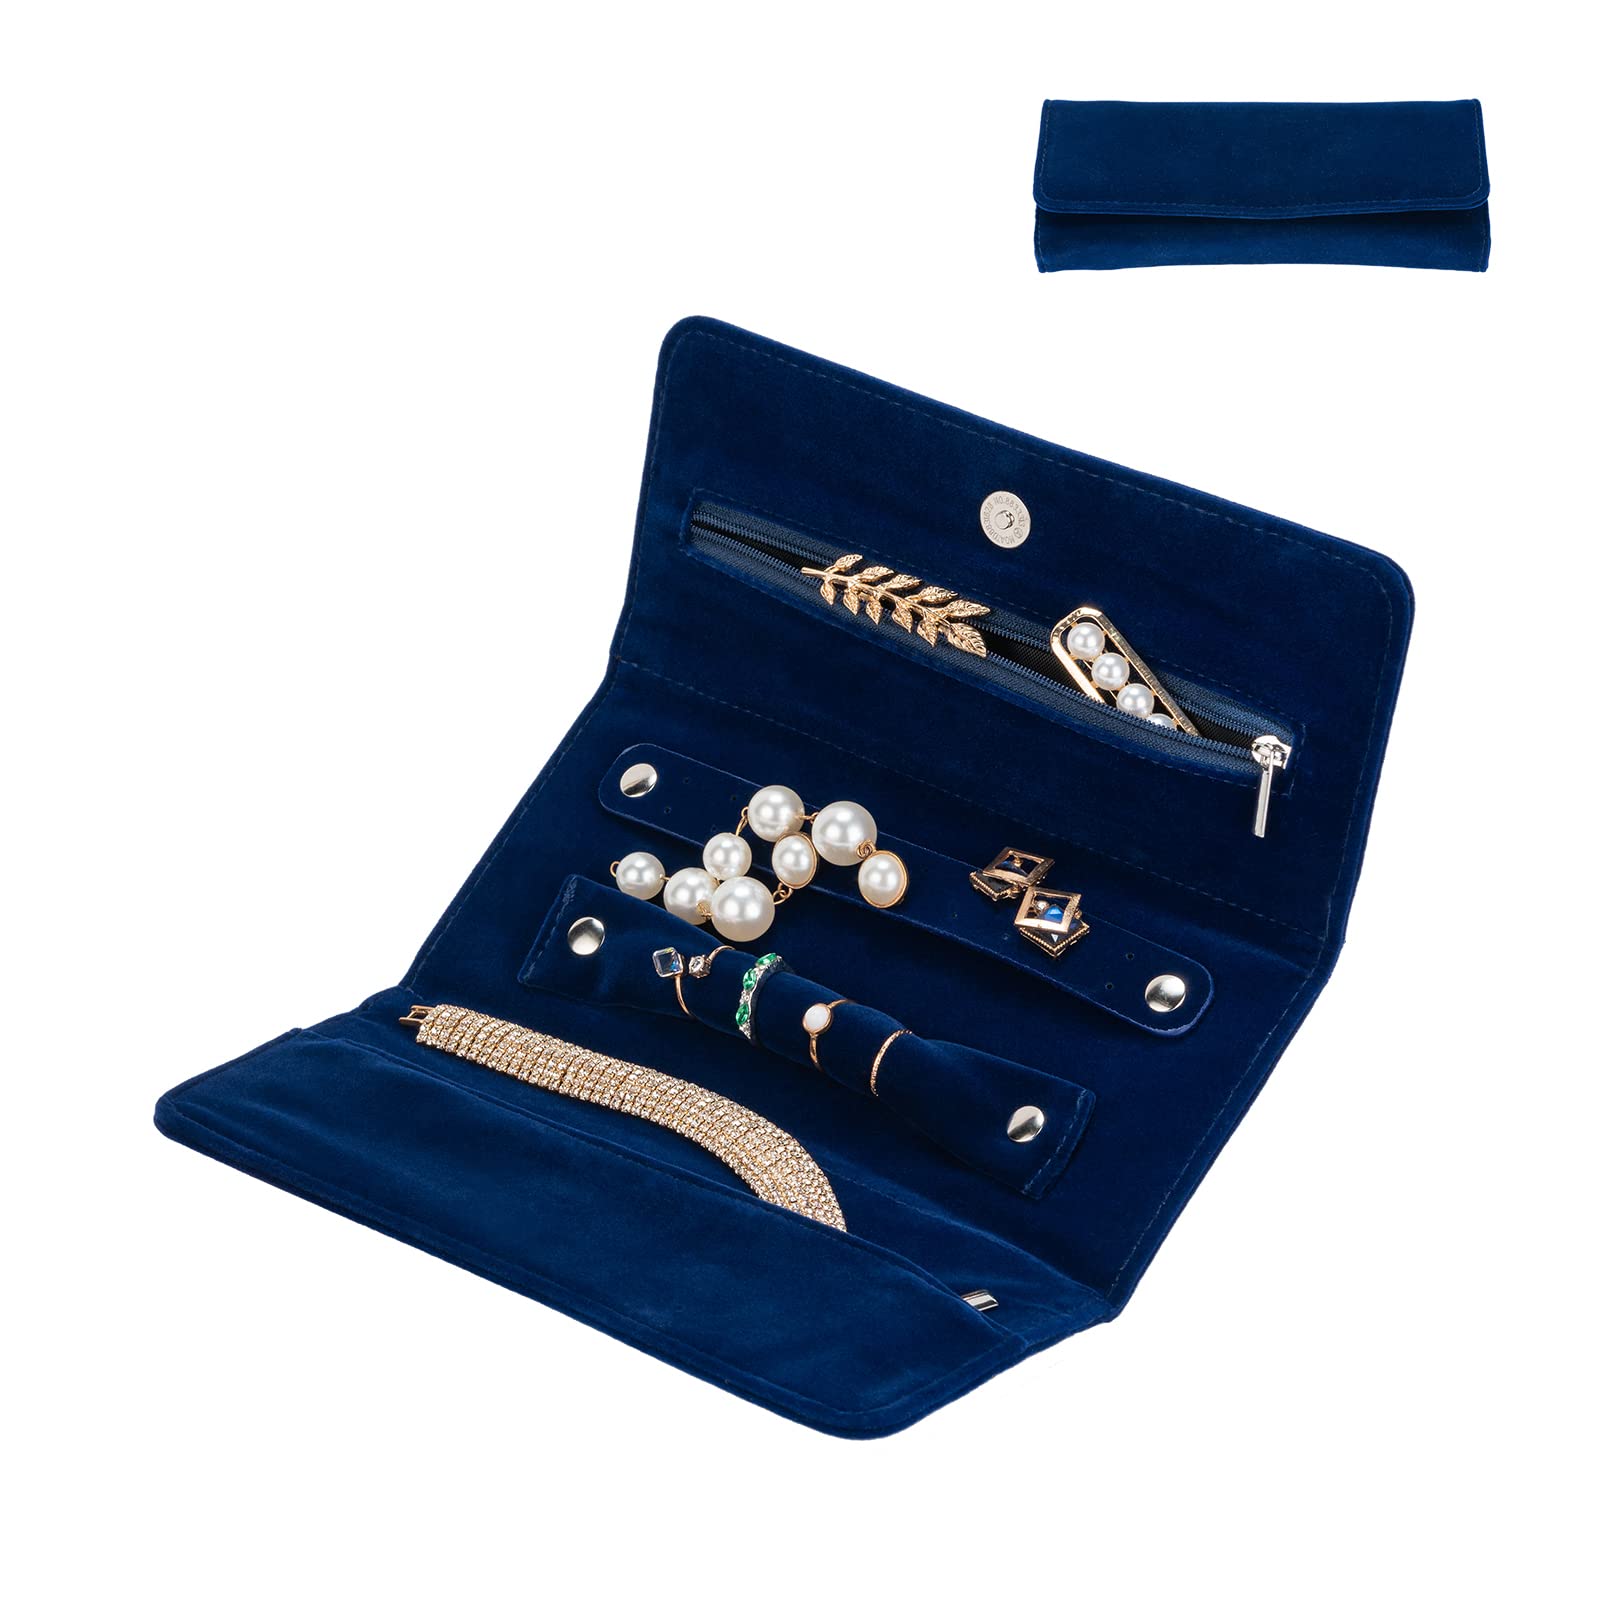 Portable Foldable Jewelry Roll Travel Jewelry Storage Organizer Bag for Women GirlsRings Earrings Necklace Bracelet